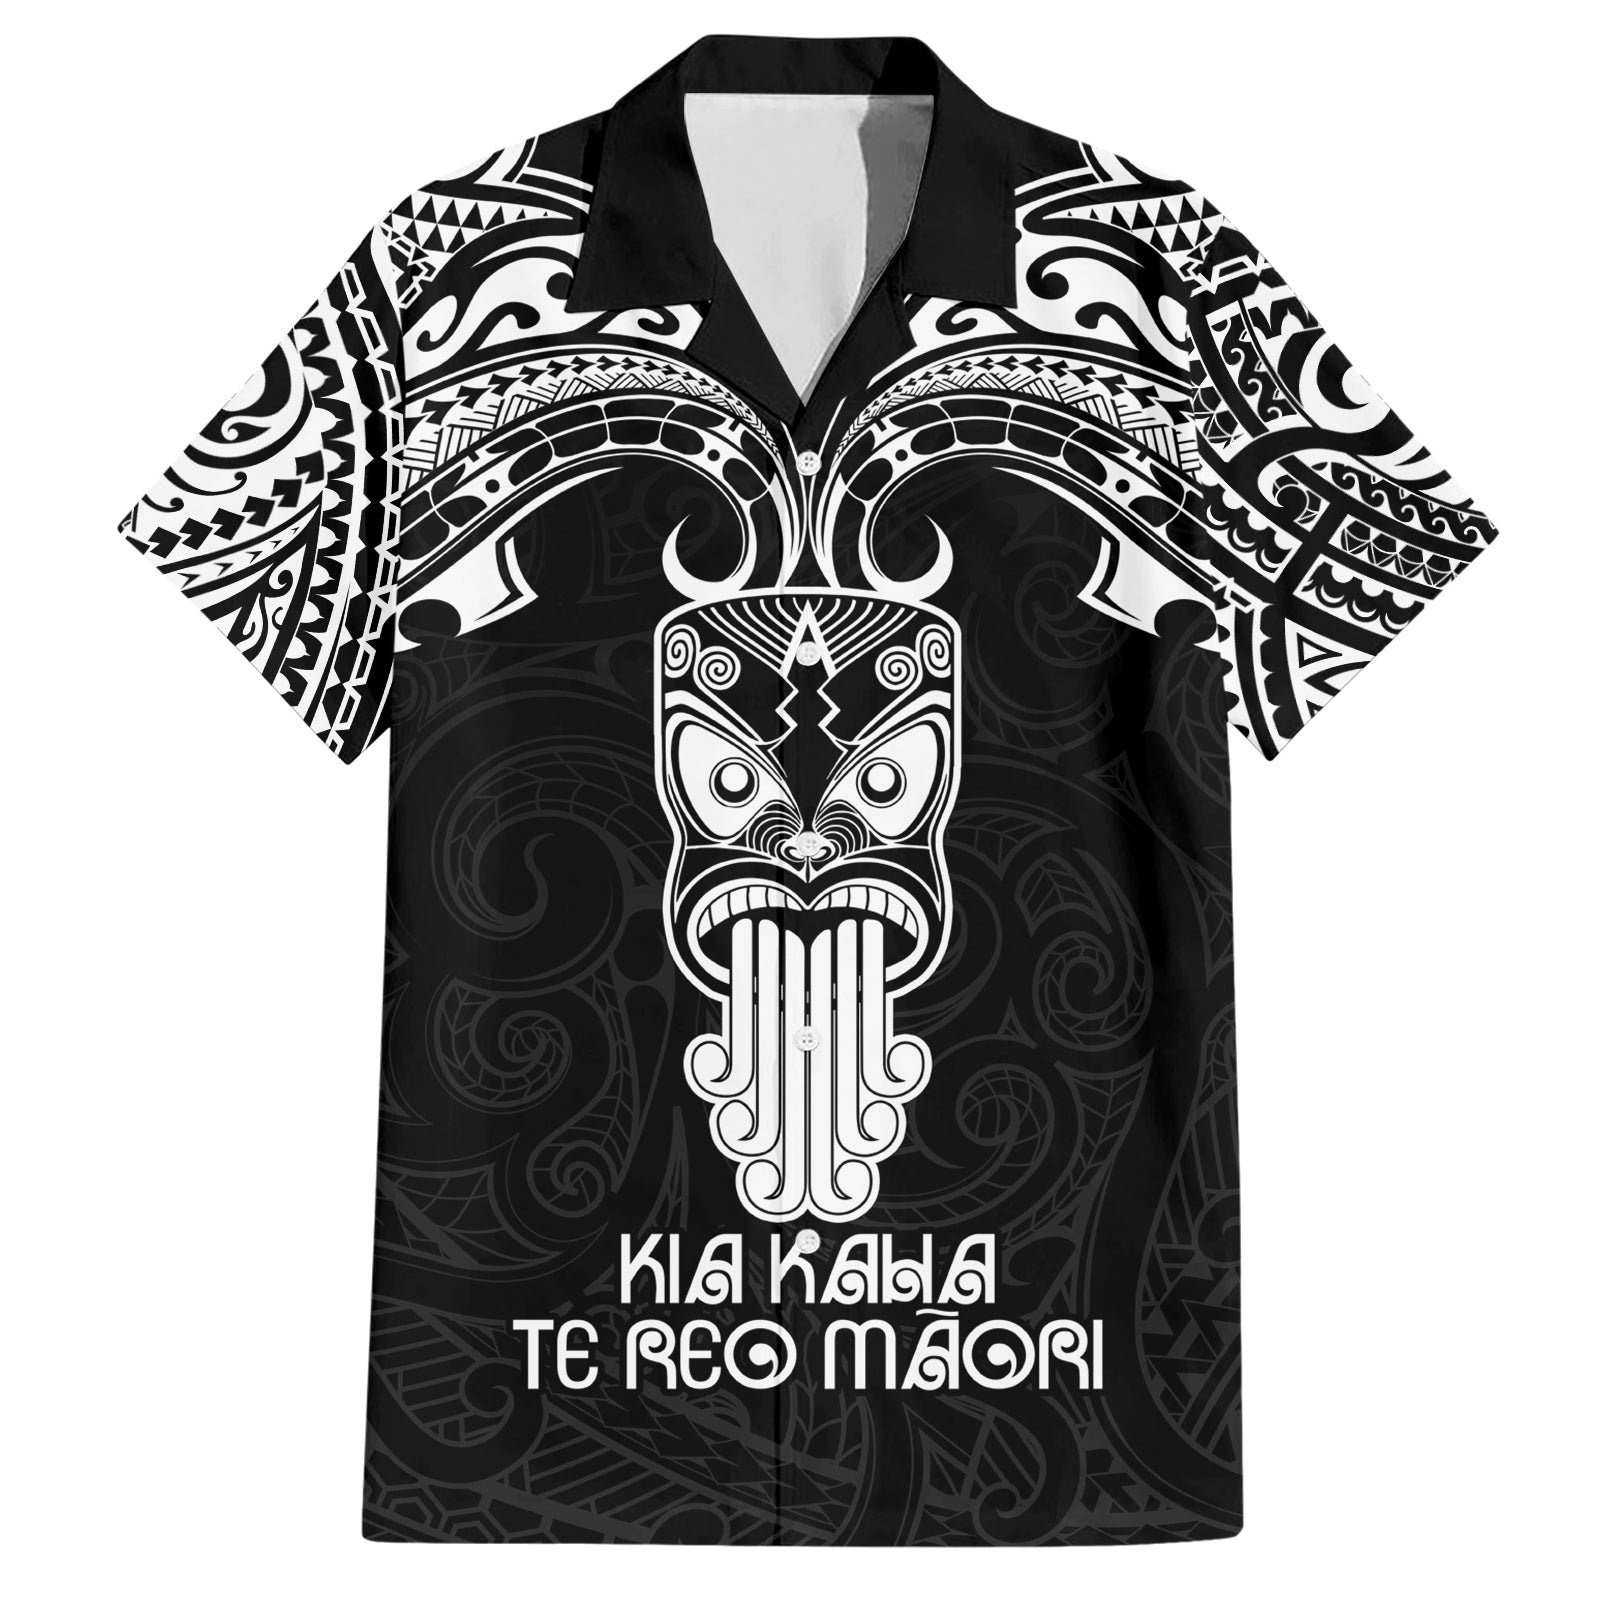 New Zealand Te Reo Maori Hawaiian Shirt Kia Kaha Maori Language Week Black Style LT9